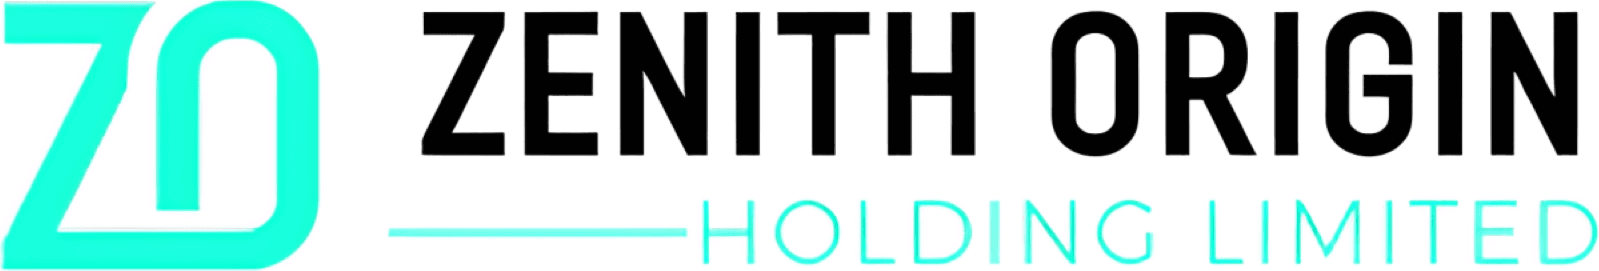 Zenith Origin Holding Limited